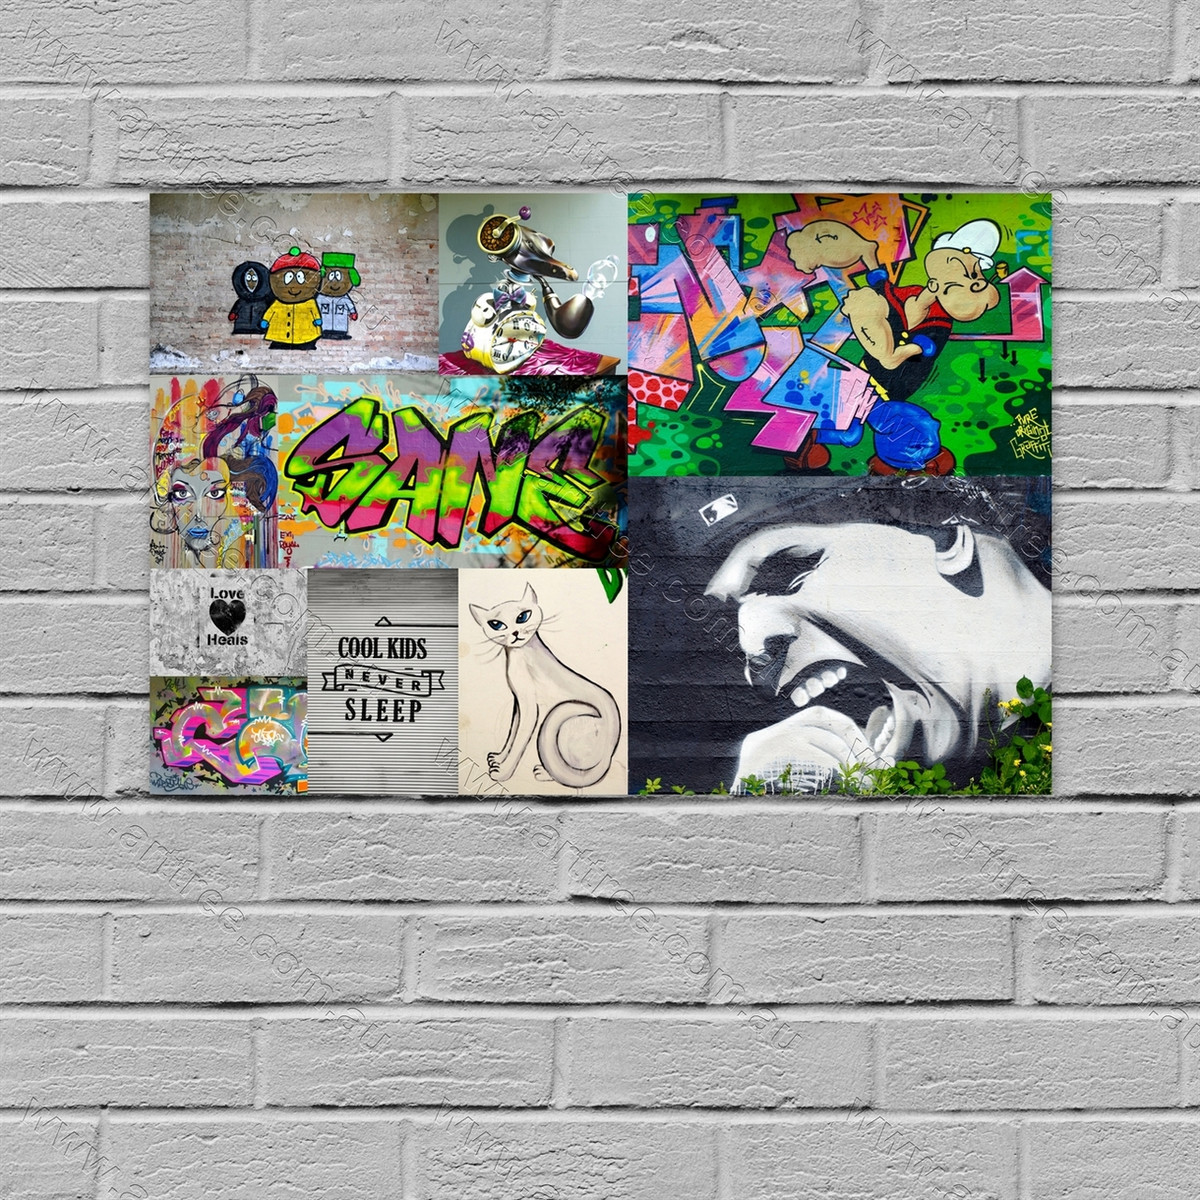 Popeye Graffiti Collage